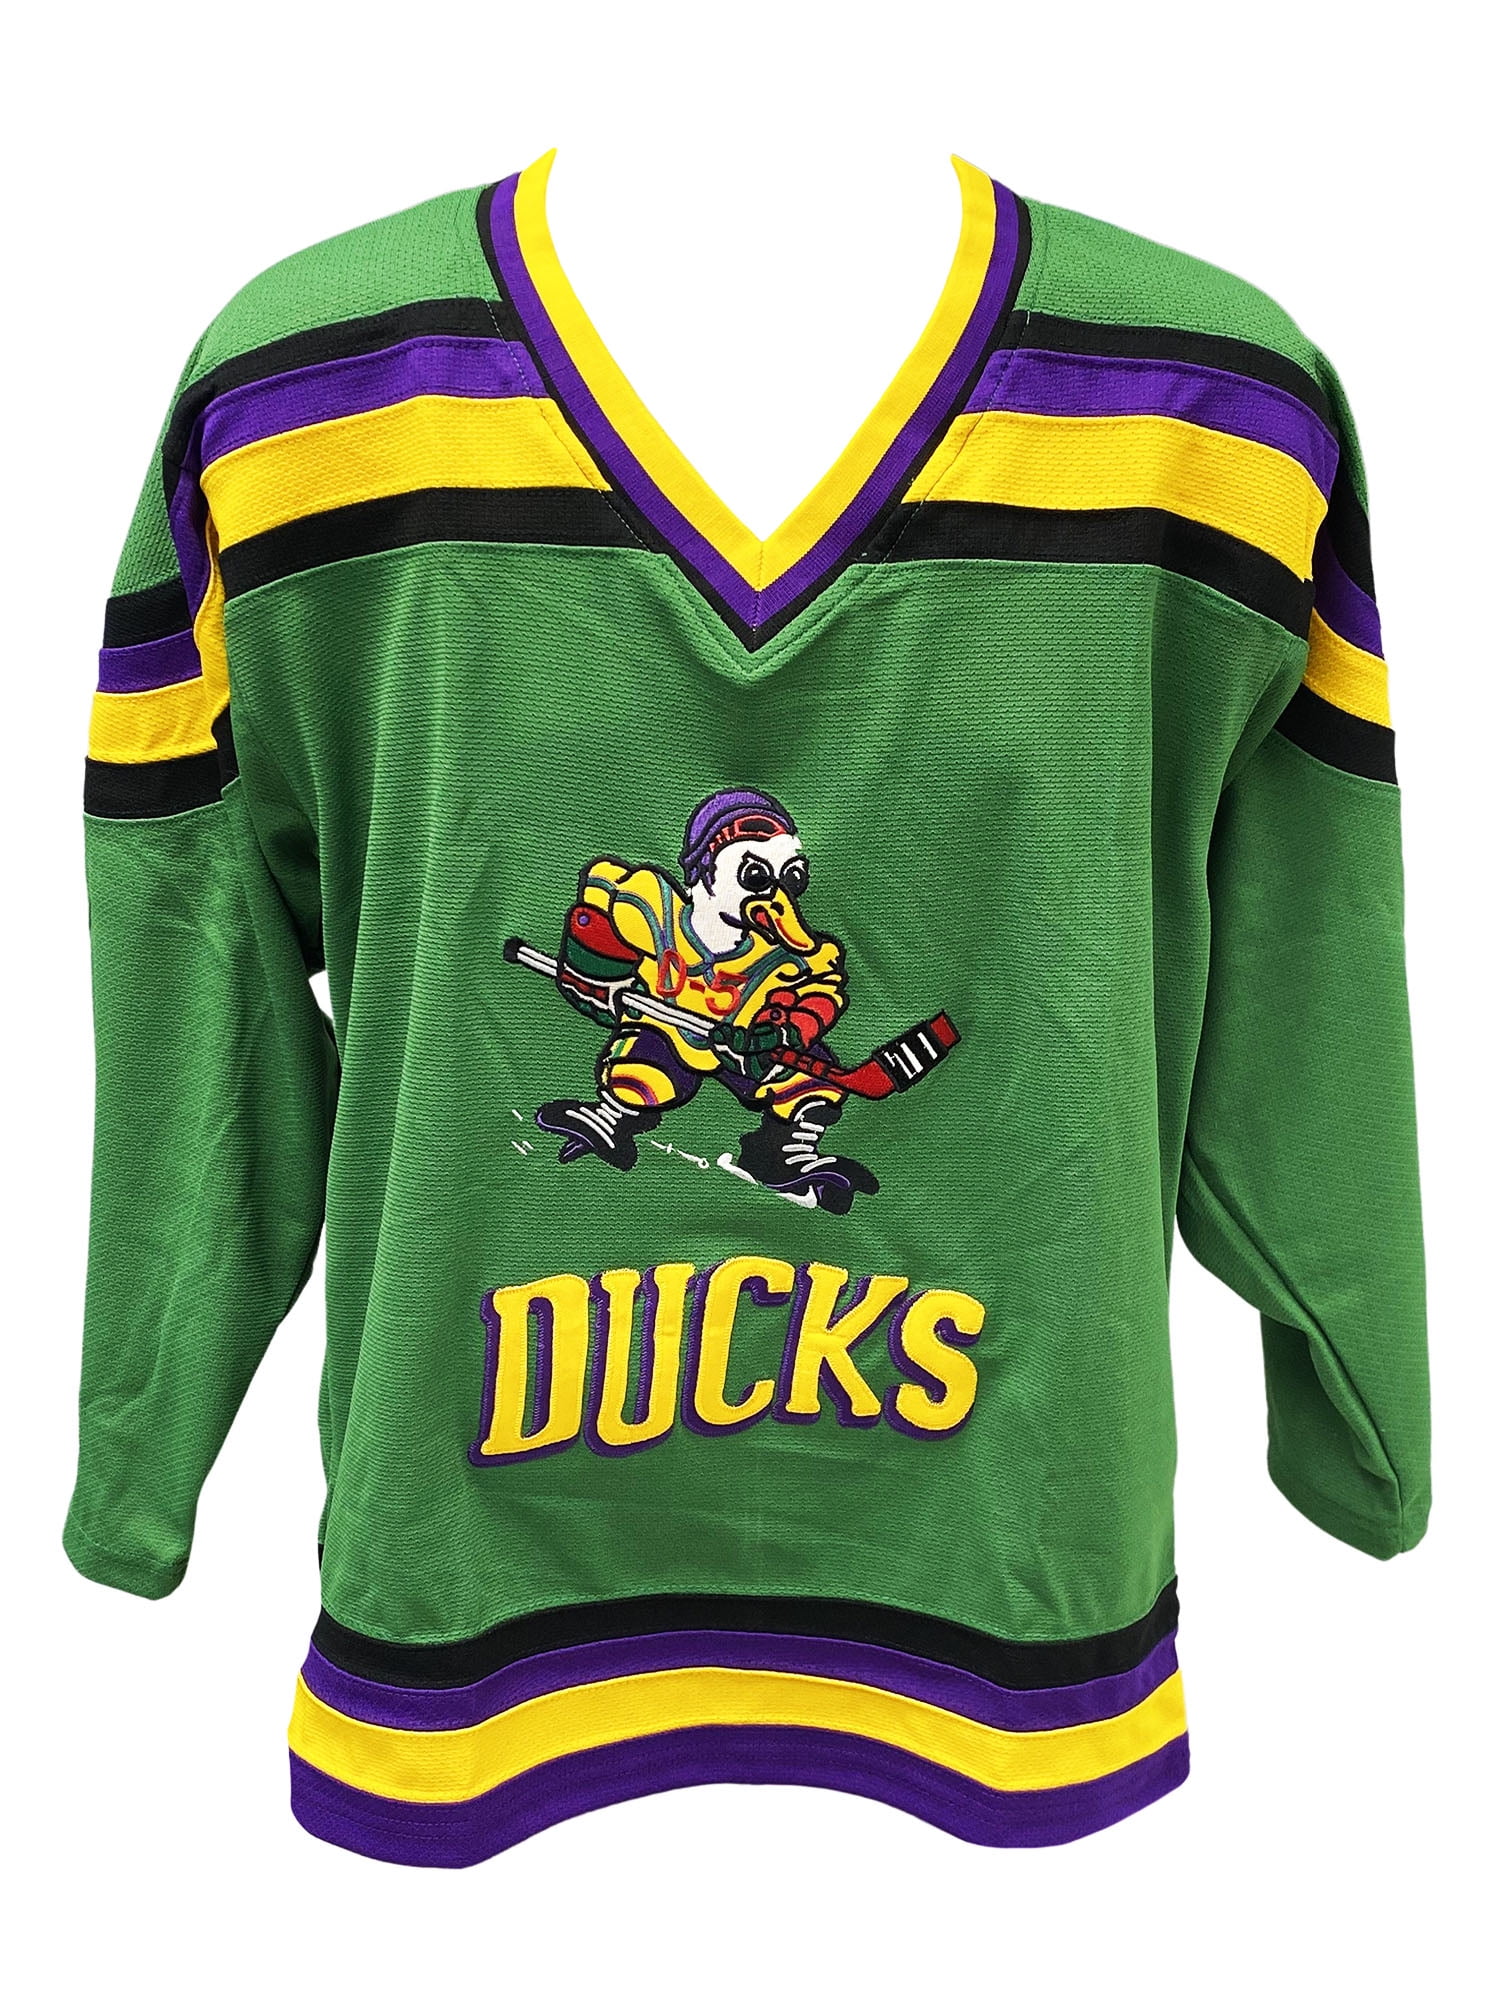 Men's Anaheim Ducks Gear & Hockey Gifts, Men's Ducks Apparel, Guys' Clothes